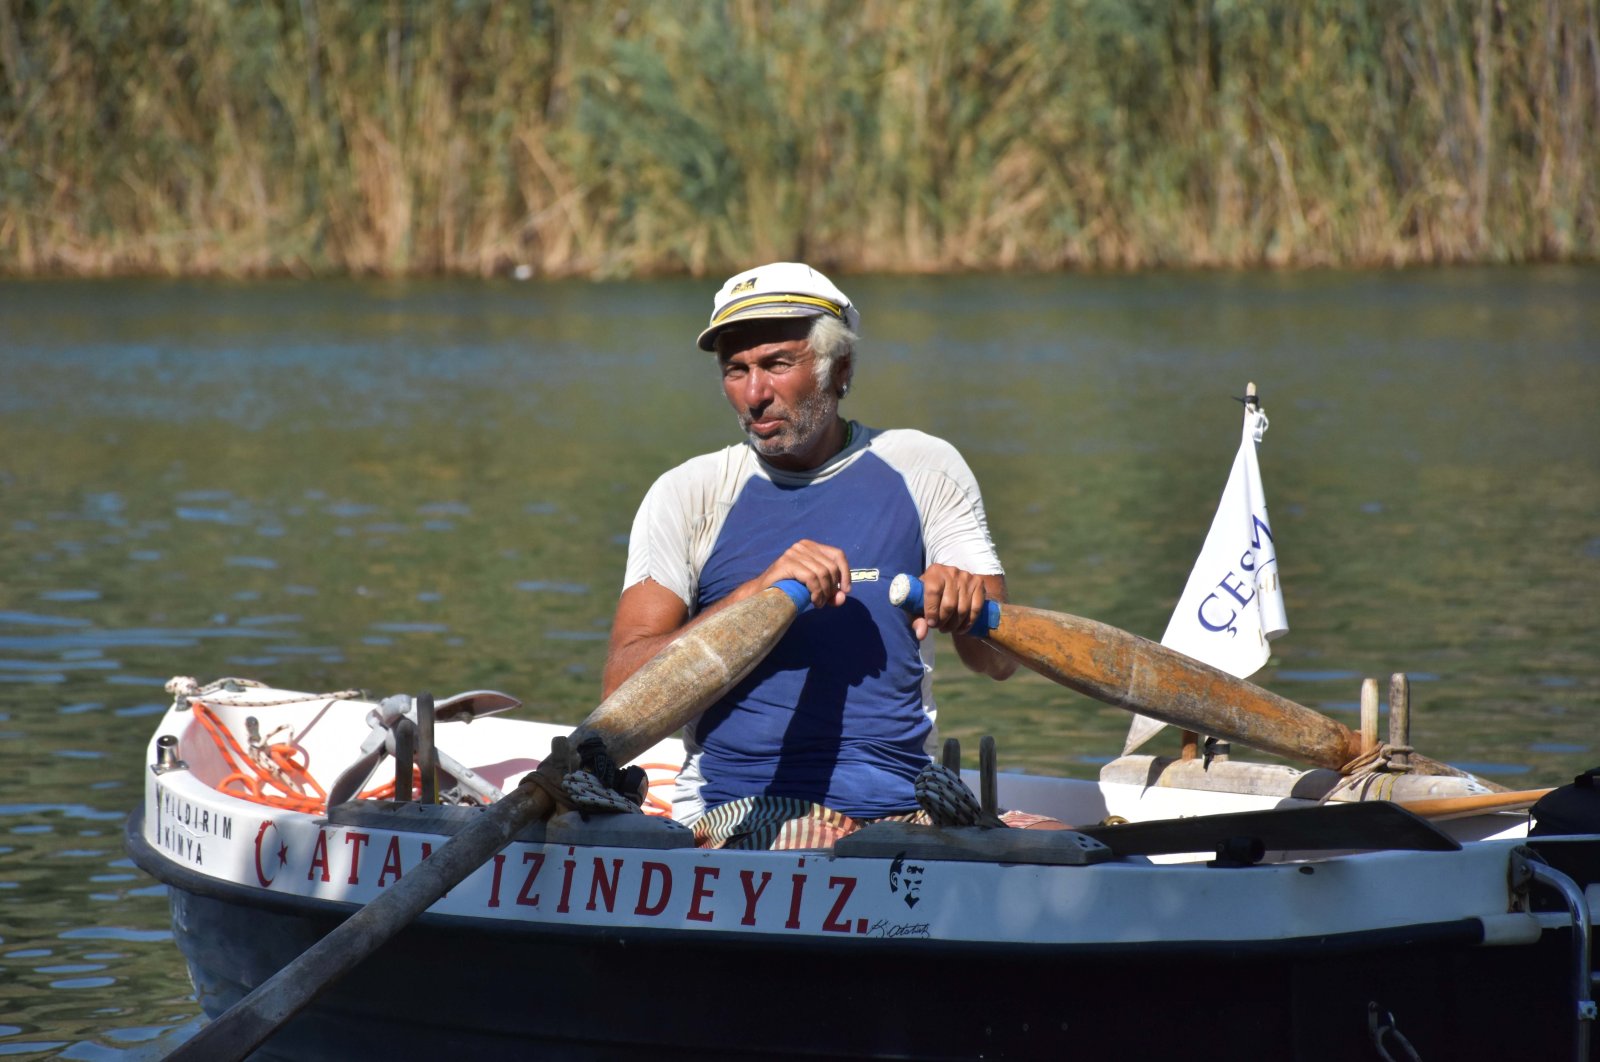 Hüseyin Ürkmez aboard his rowboat in the Dalyan district of Muğla province, southwestern Turkey, Aug. 27, 2020. (AA Photo)